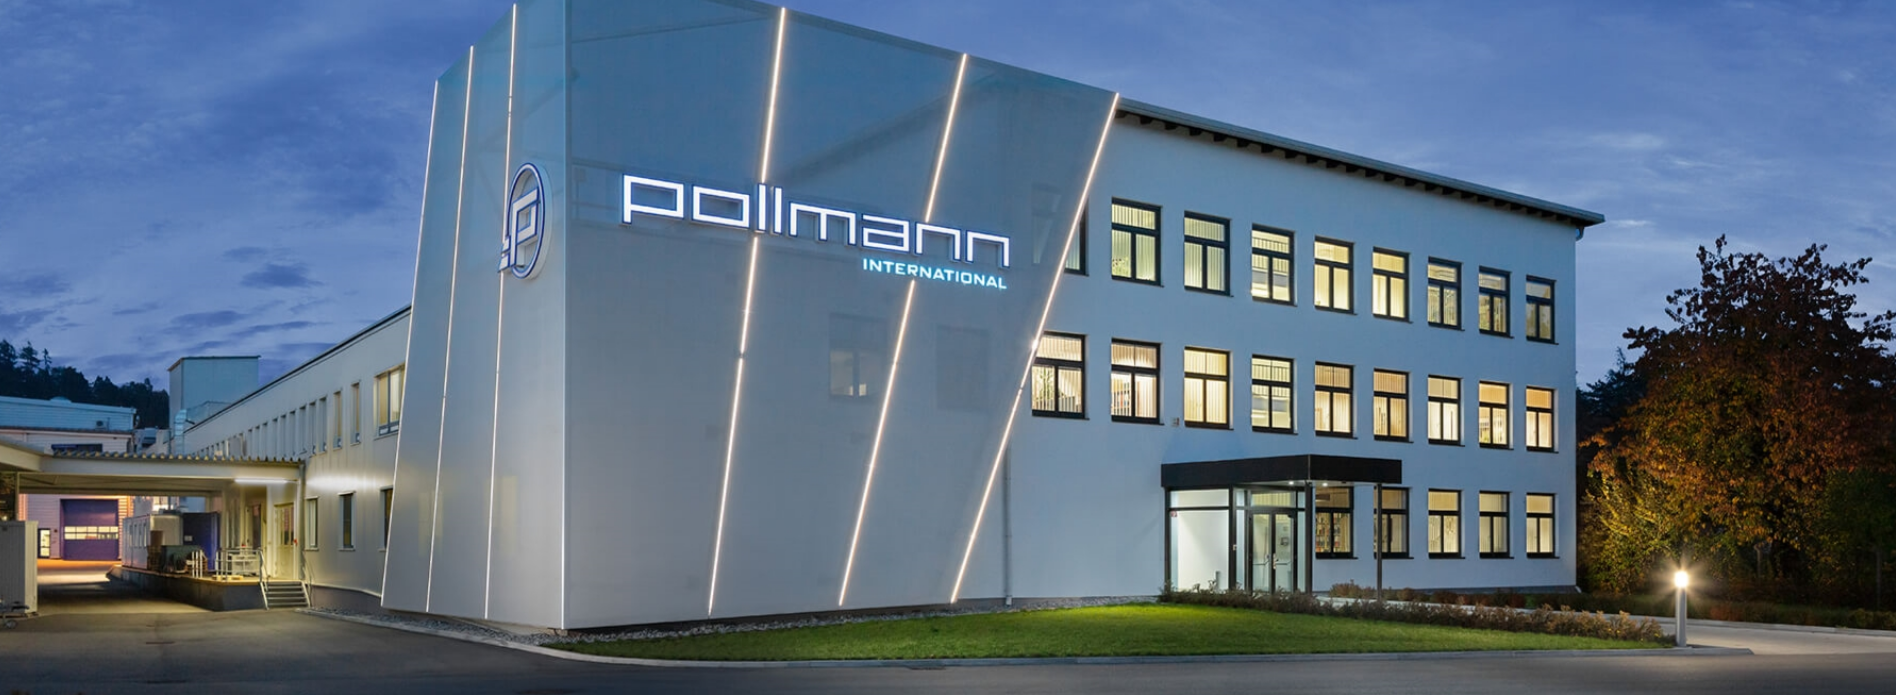 Freie Stelle Pollmann International GmbH